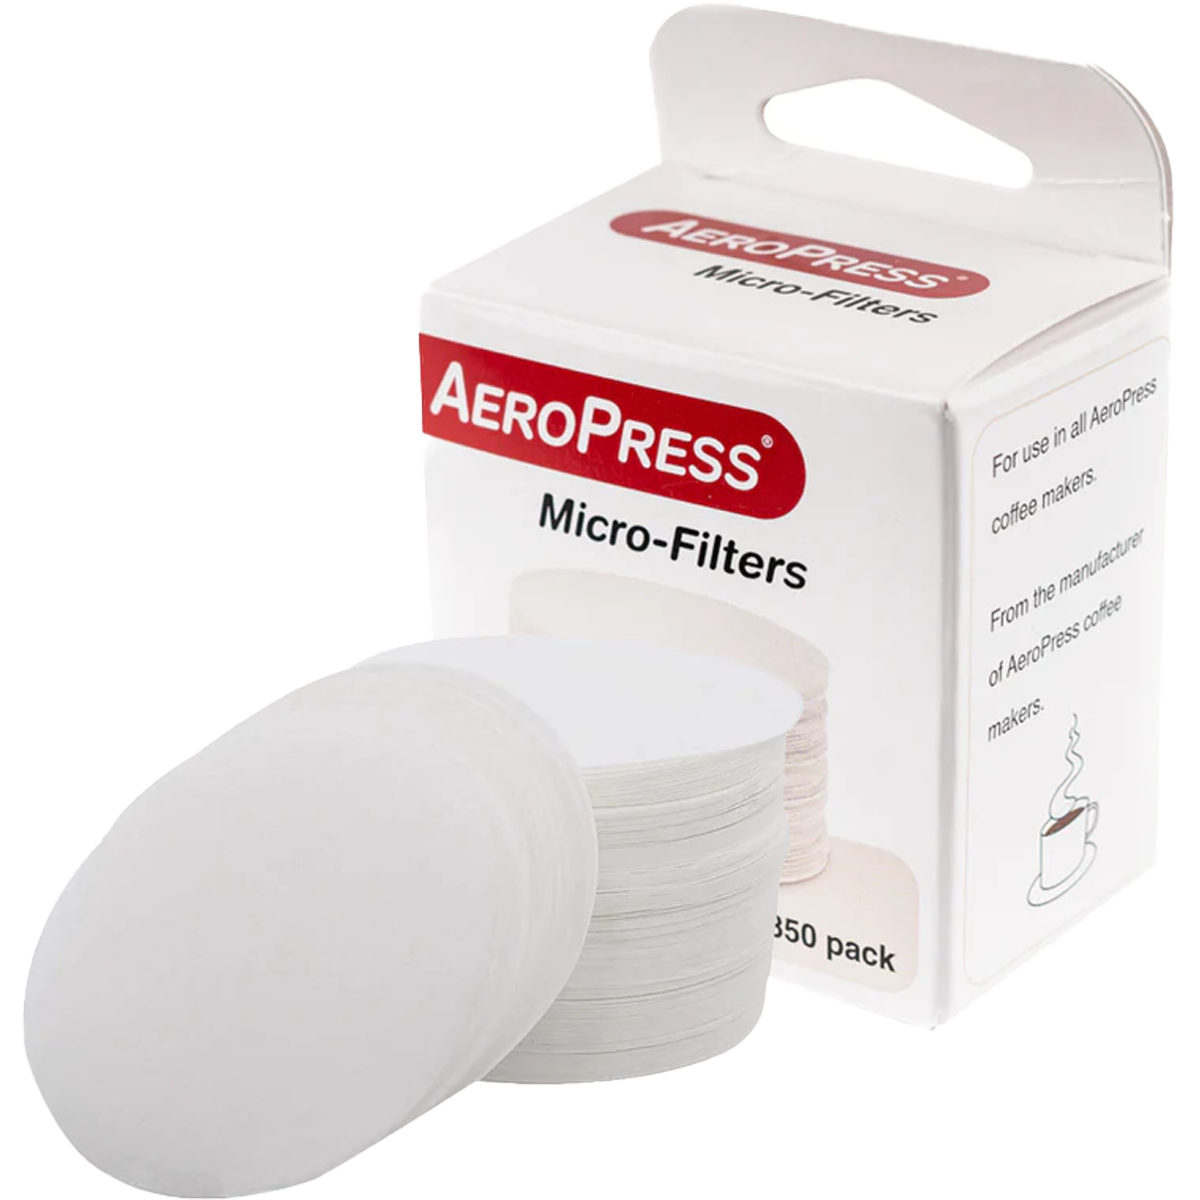 AeroPress Micro Filter alternate view